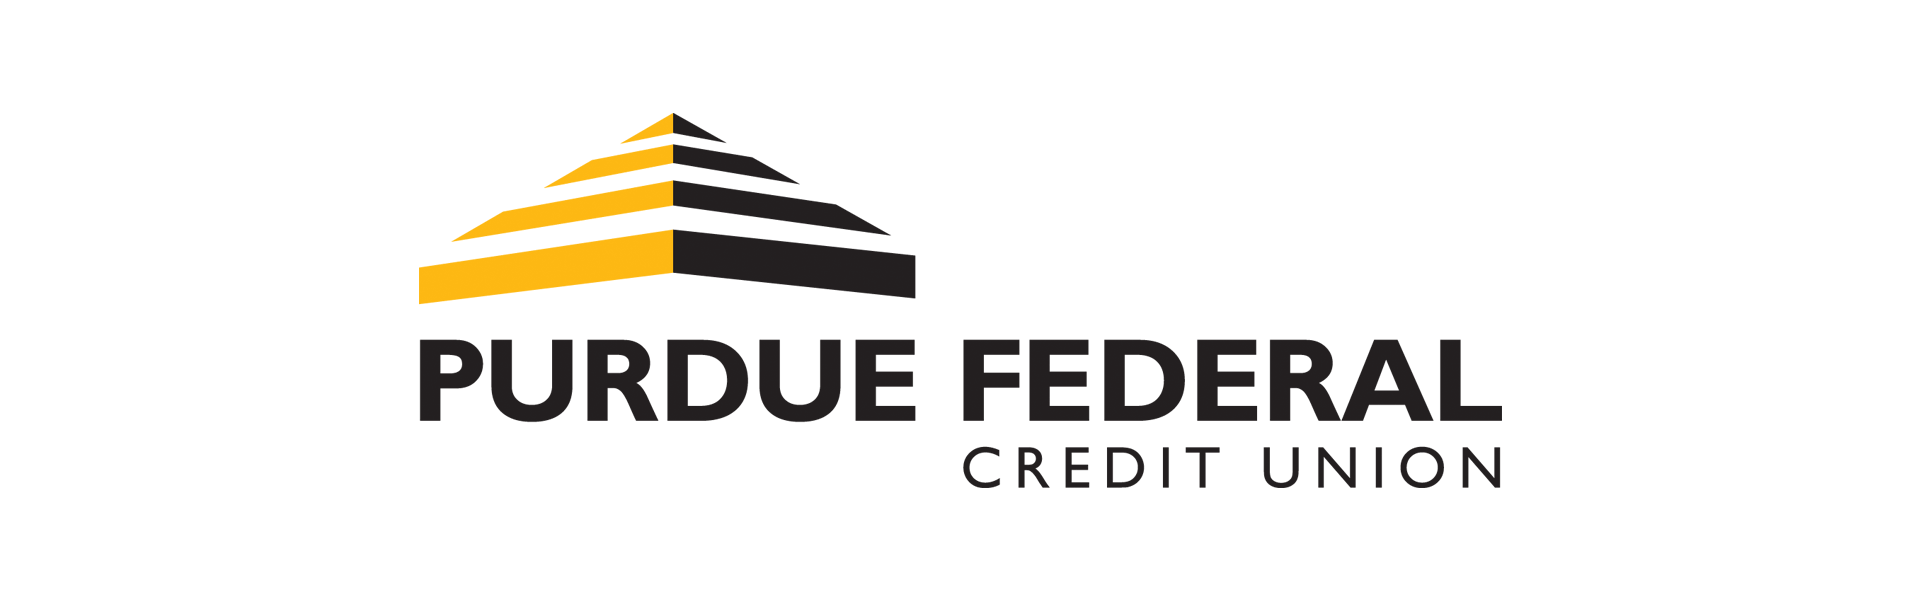 Federal Logo - Purdue Federal Credit Union - Purdue Convocations